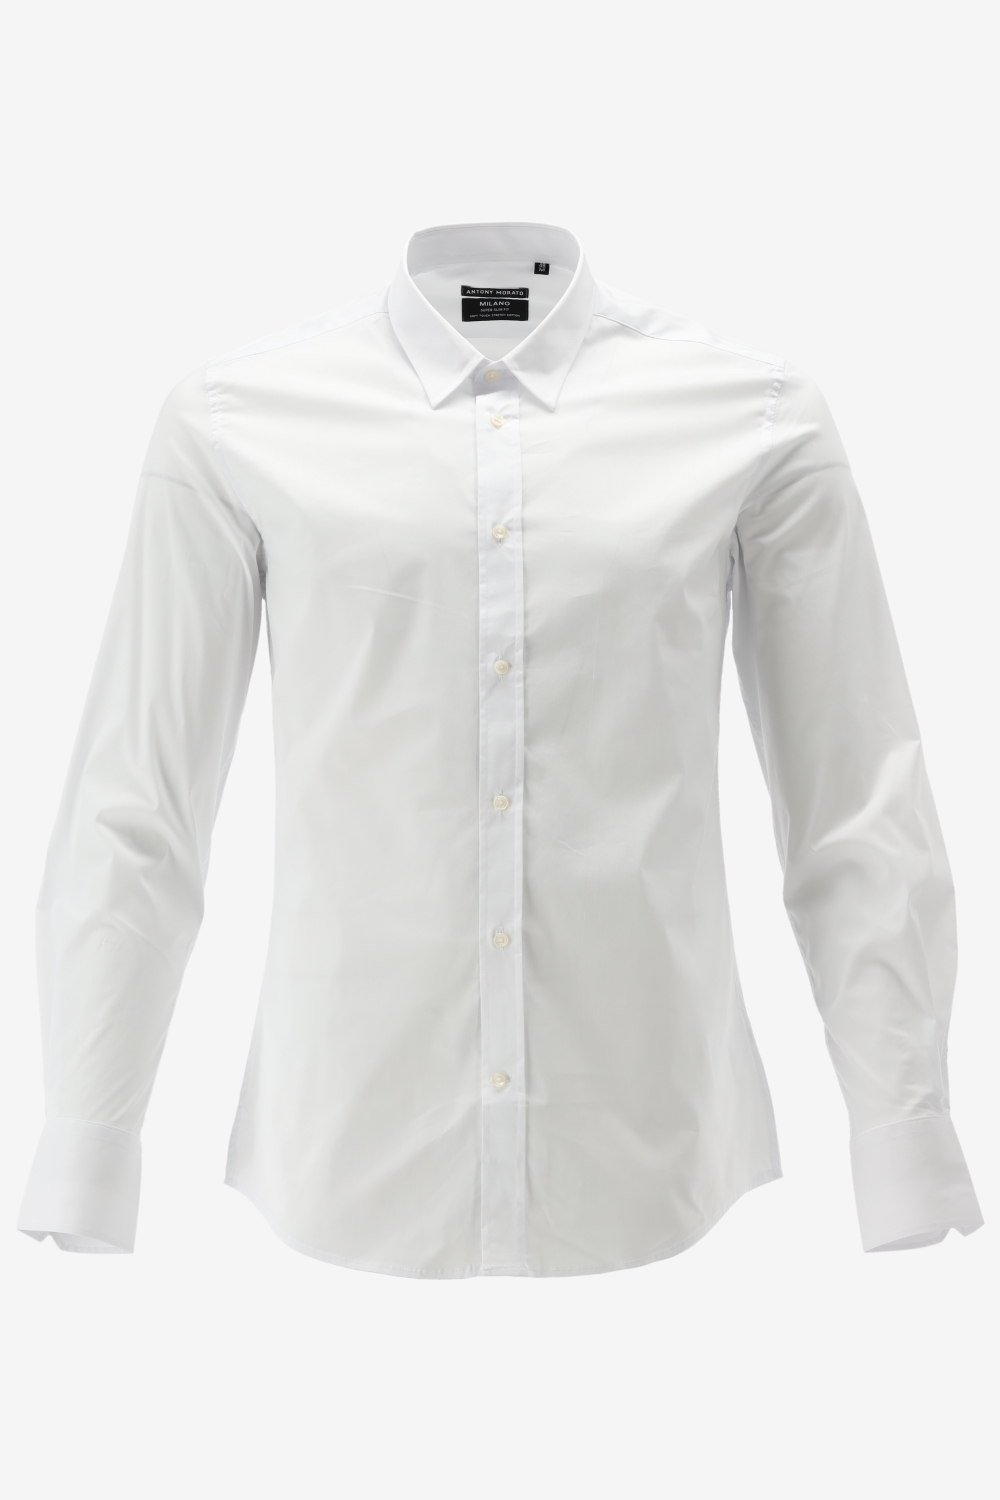 Antony Morato Overhemd Shirt Milano Mmsl00694 Fa450010 1000 White Mannen Maat - 54